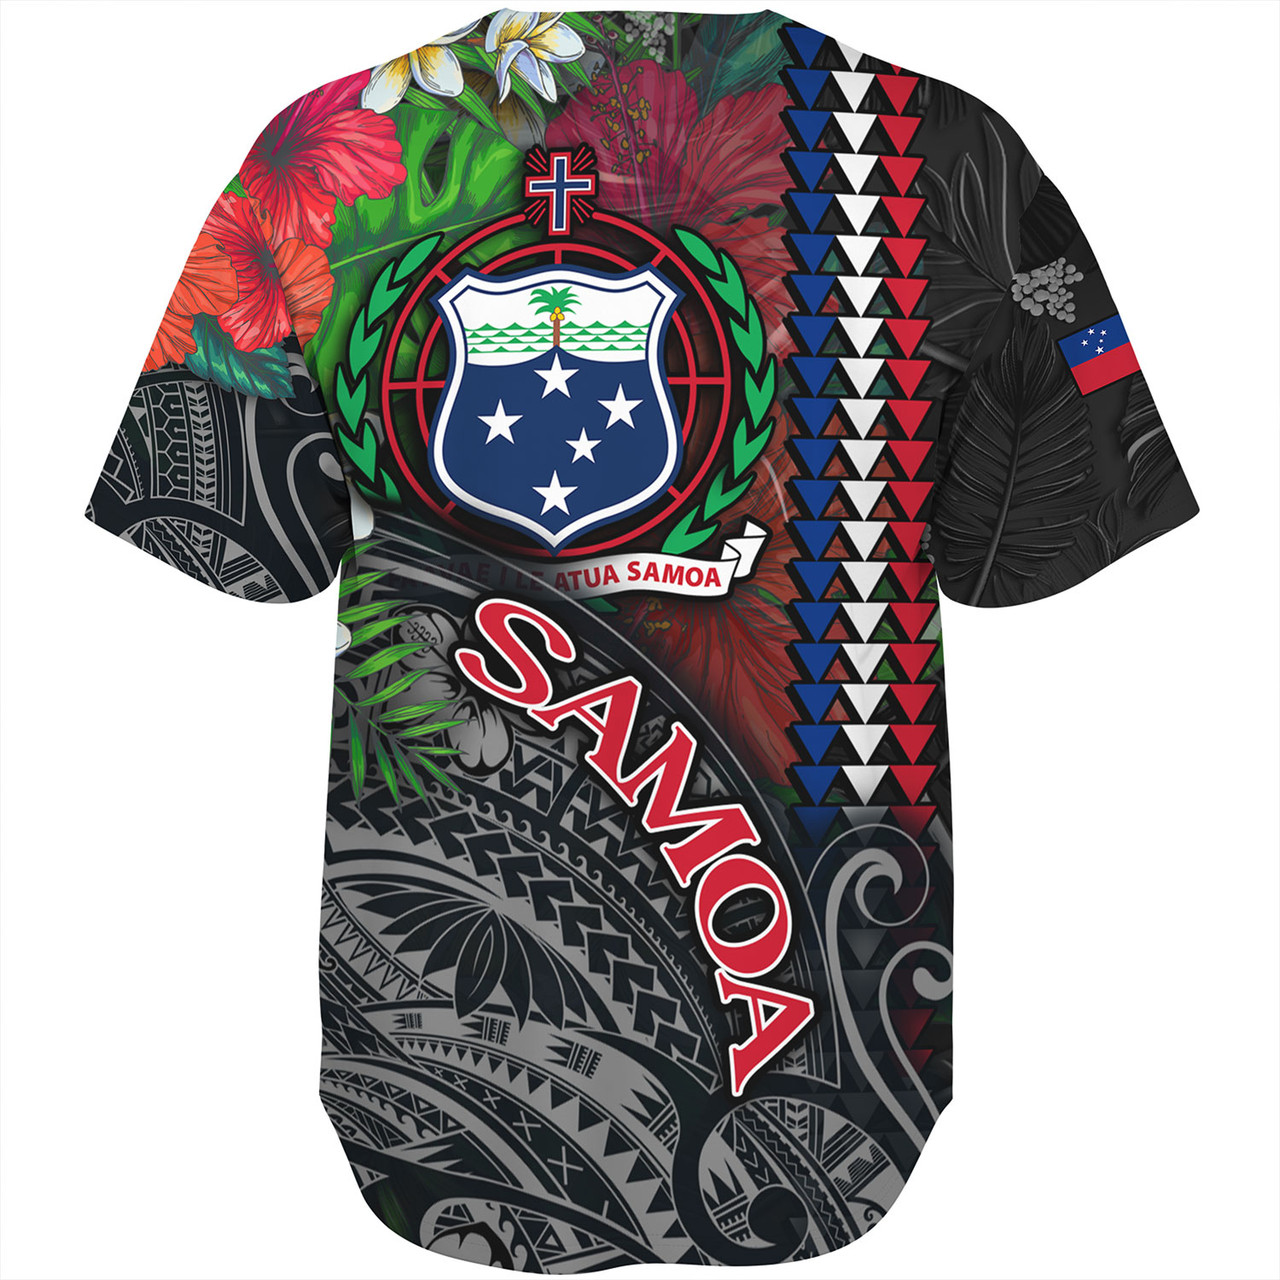 Samoa Custom Personalised Baseball Shirt Samoa Seal Hibiscus And Plumeria With Palm Branches Vintage Style